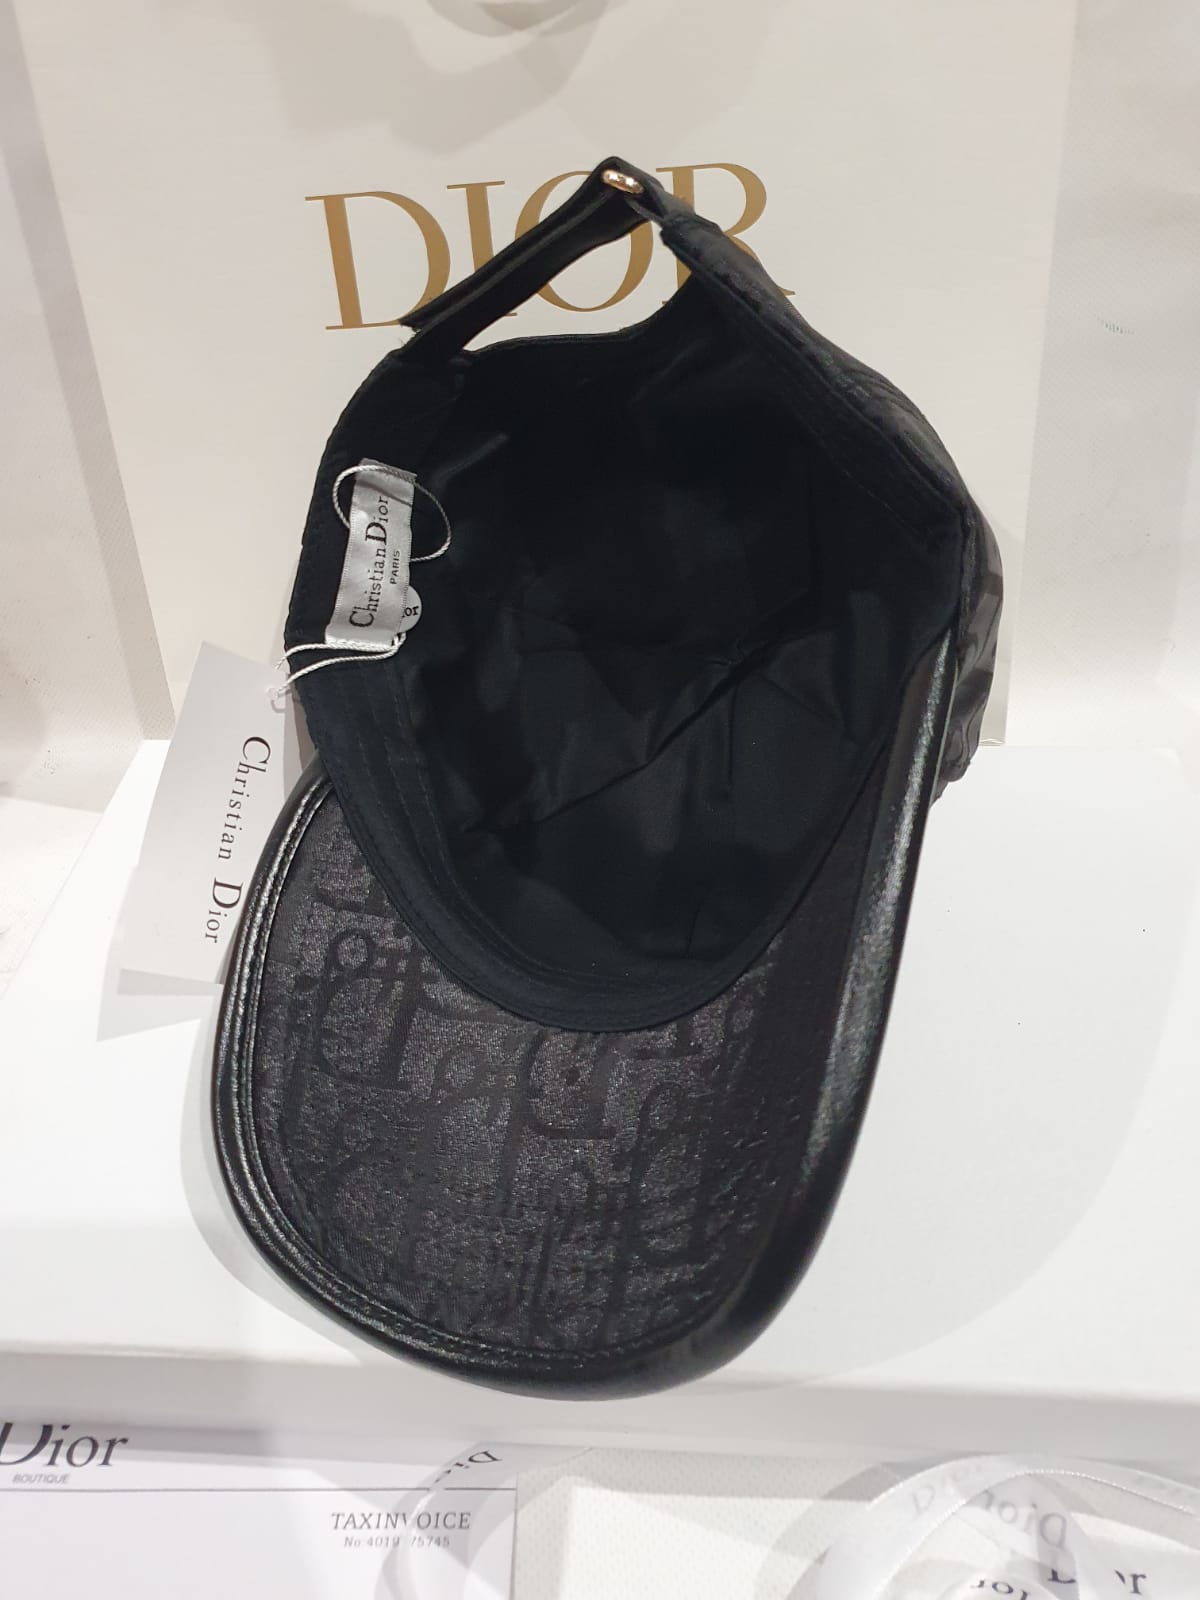 Christian Dior Cap